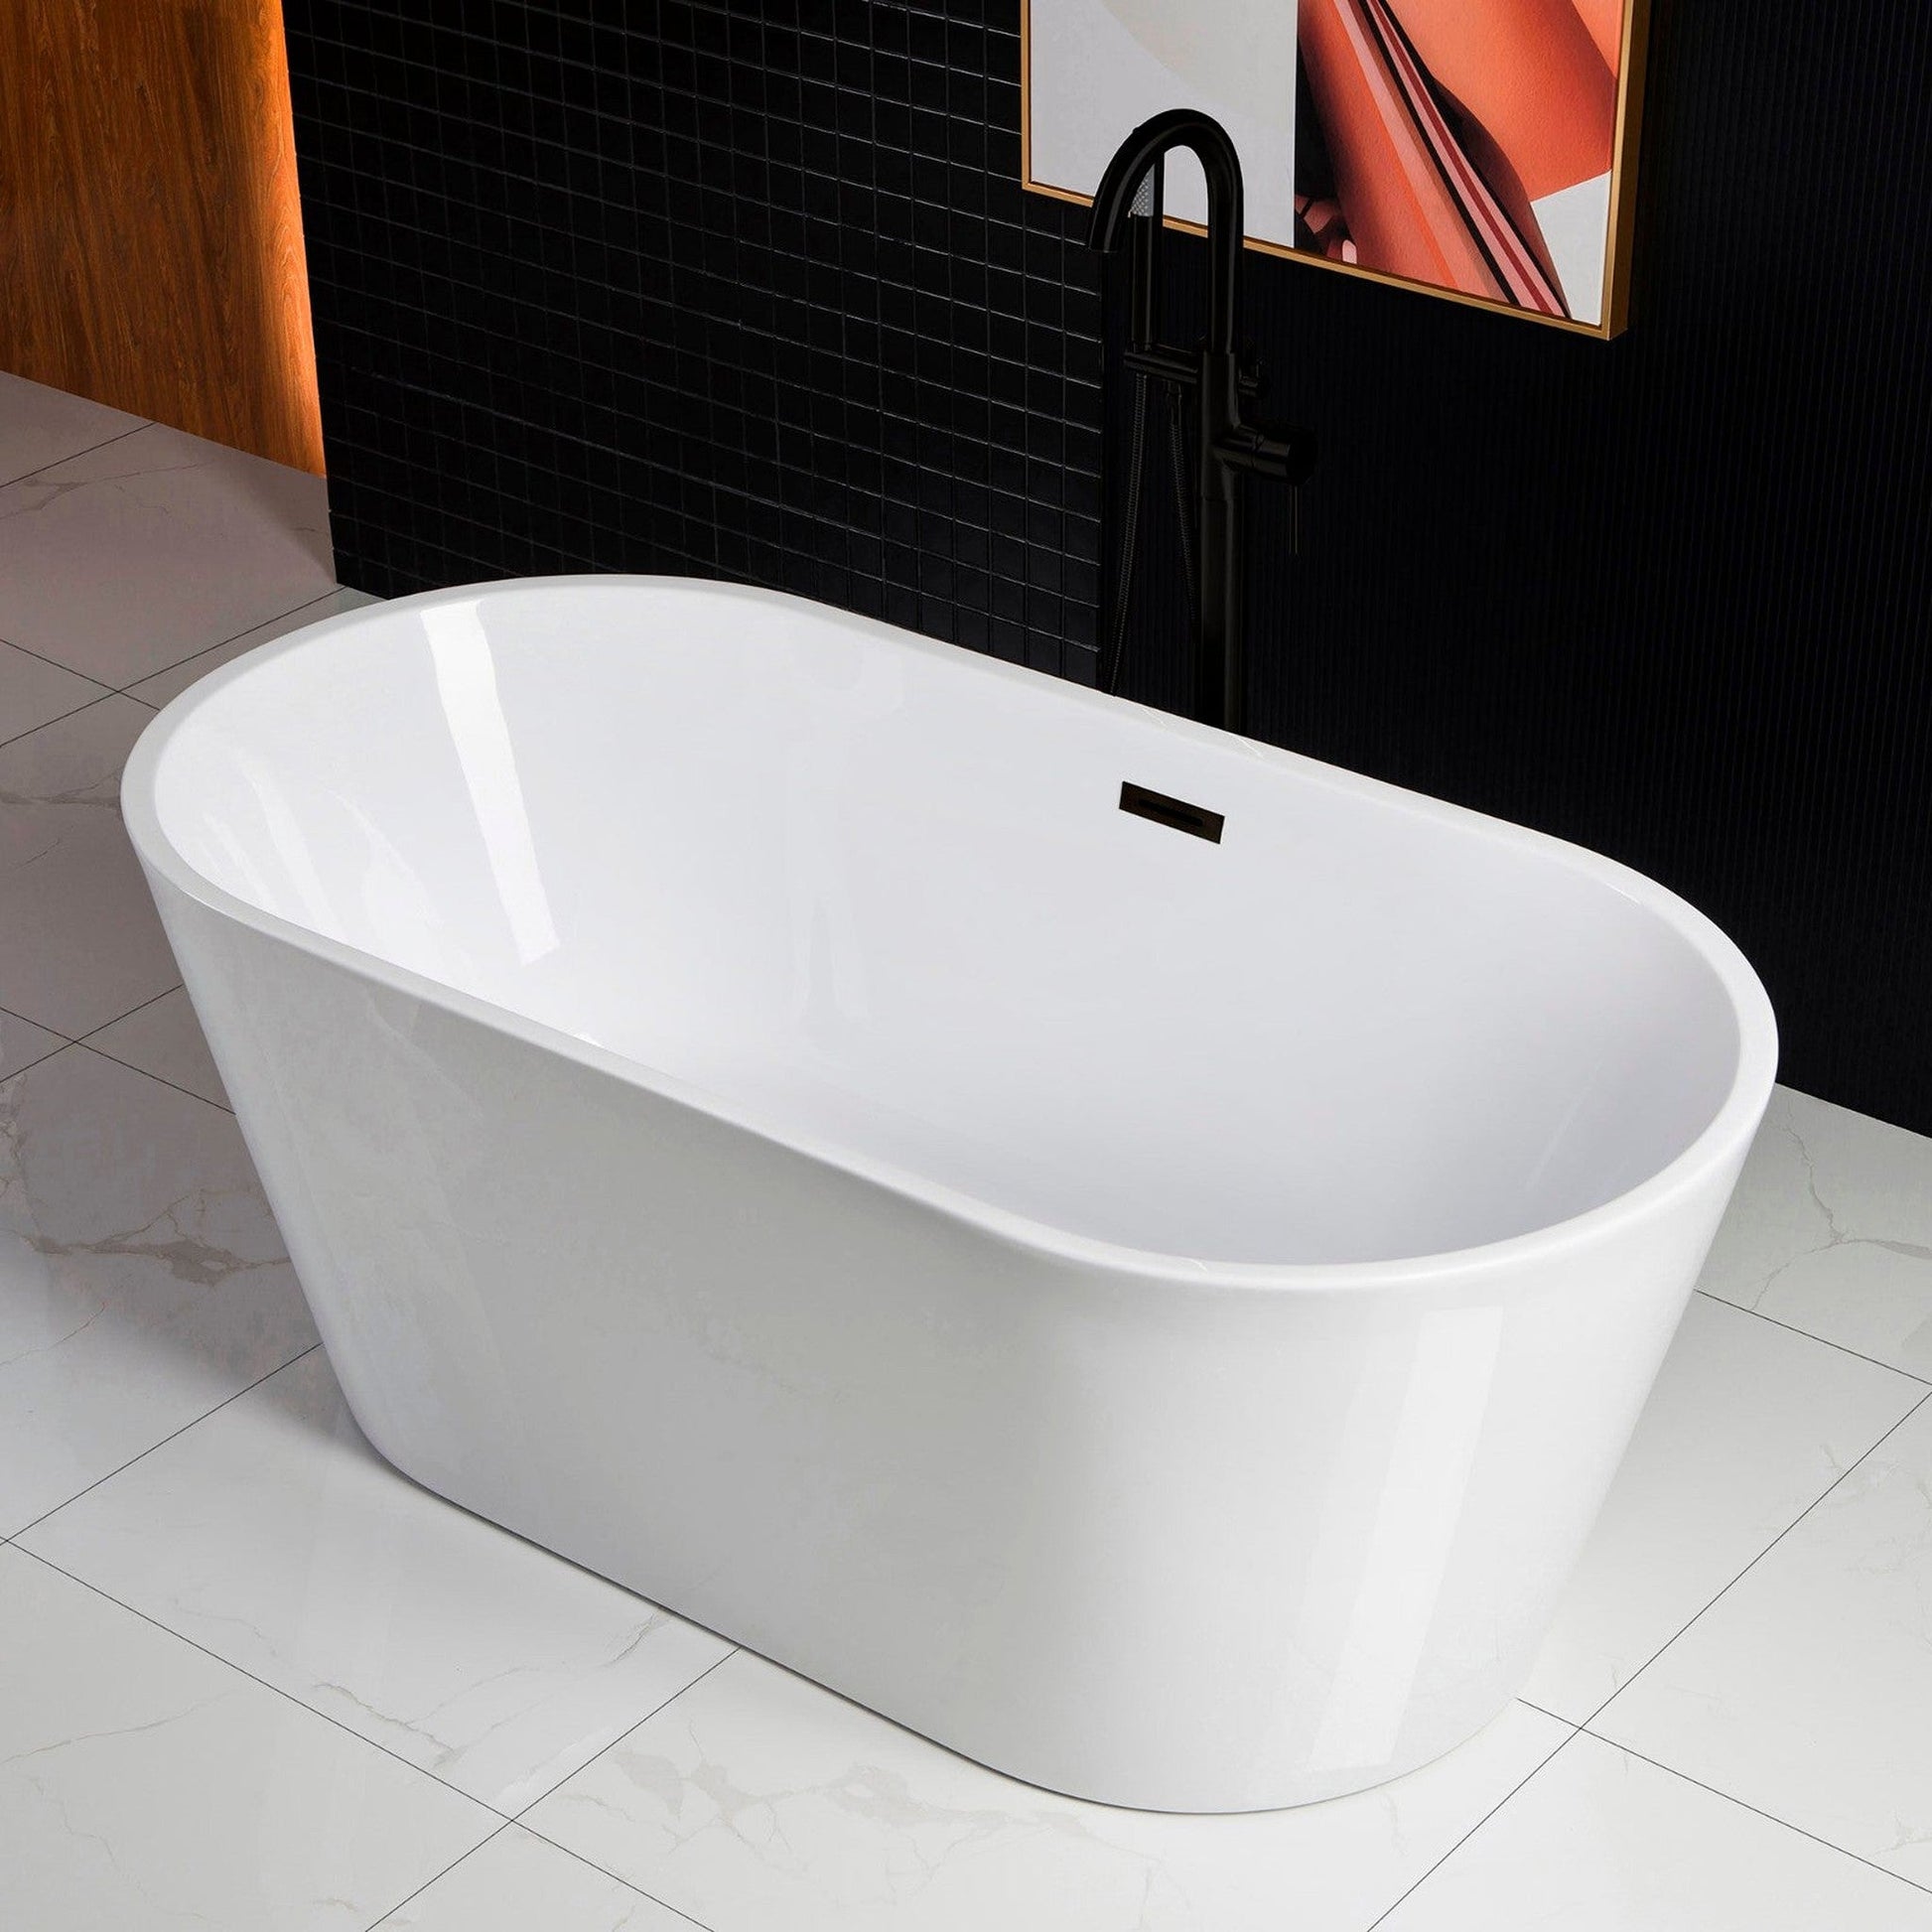 WoodBridge B0014 59" White Acrylic Freestanding Soaking Bathtub With Matte Black Drain, Overflow, F0006MBVT Tub Filler and Caddy Tray